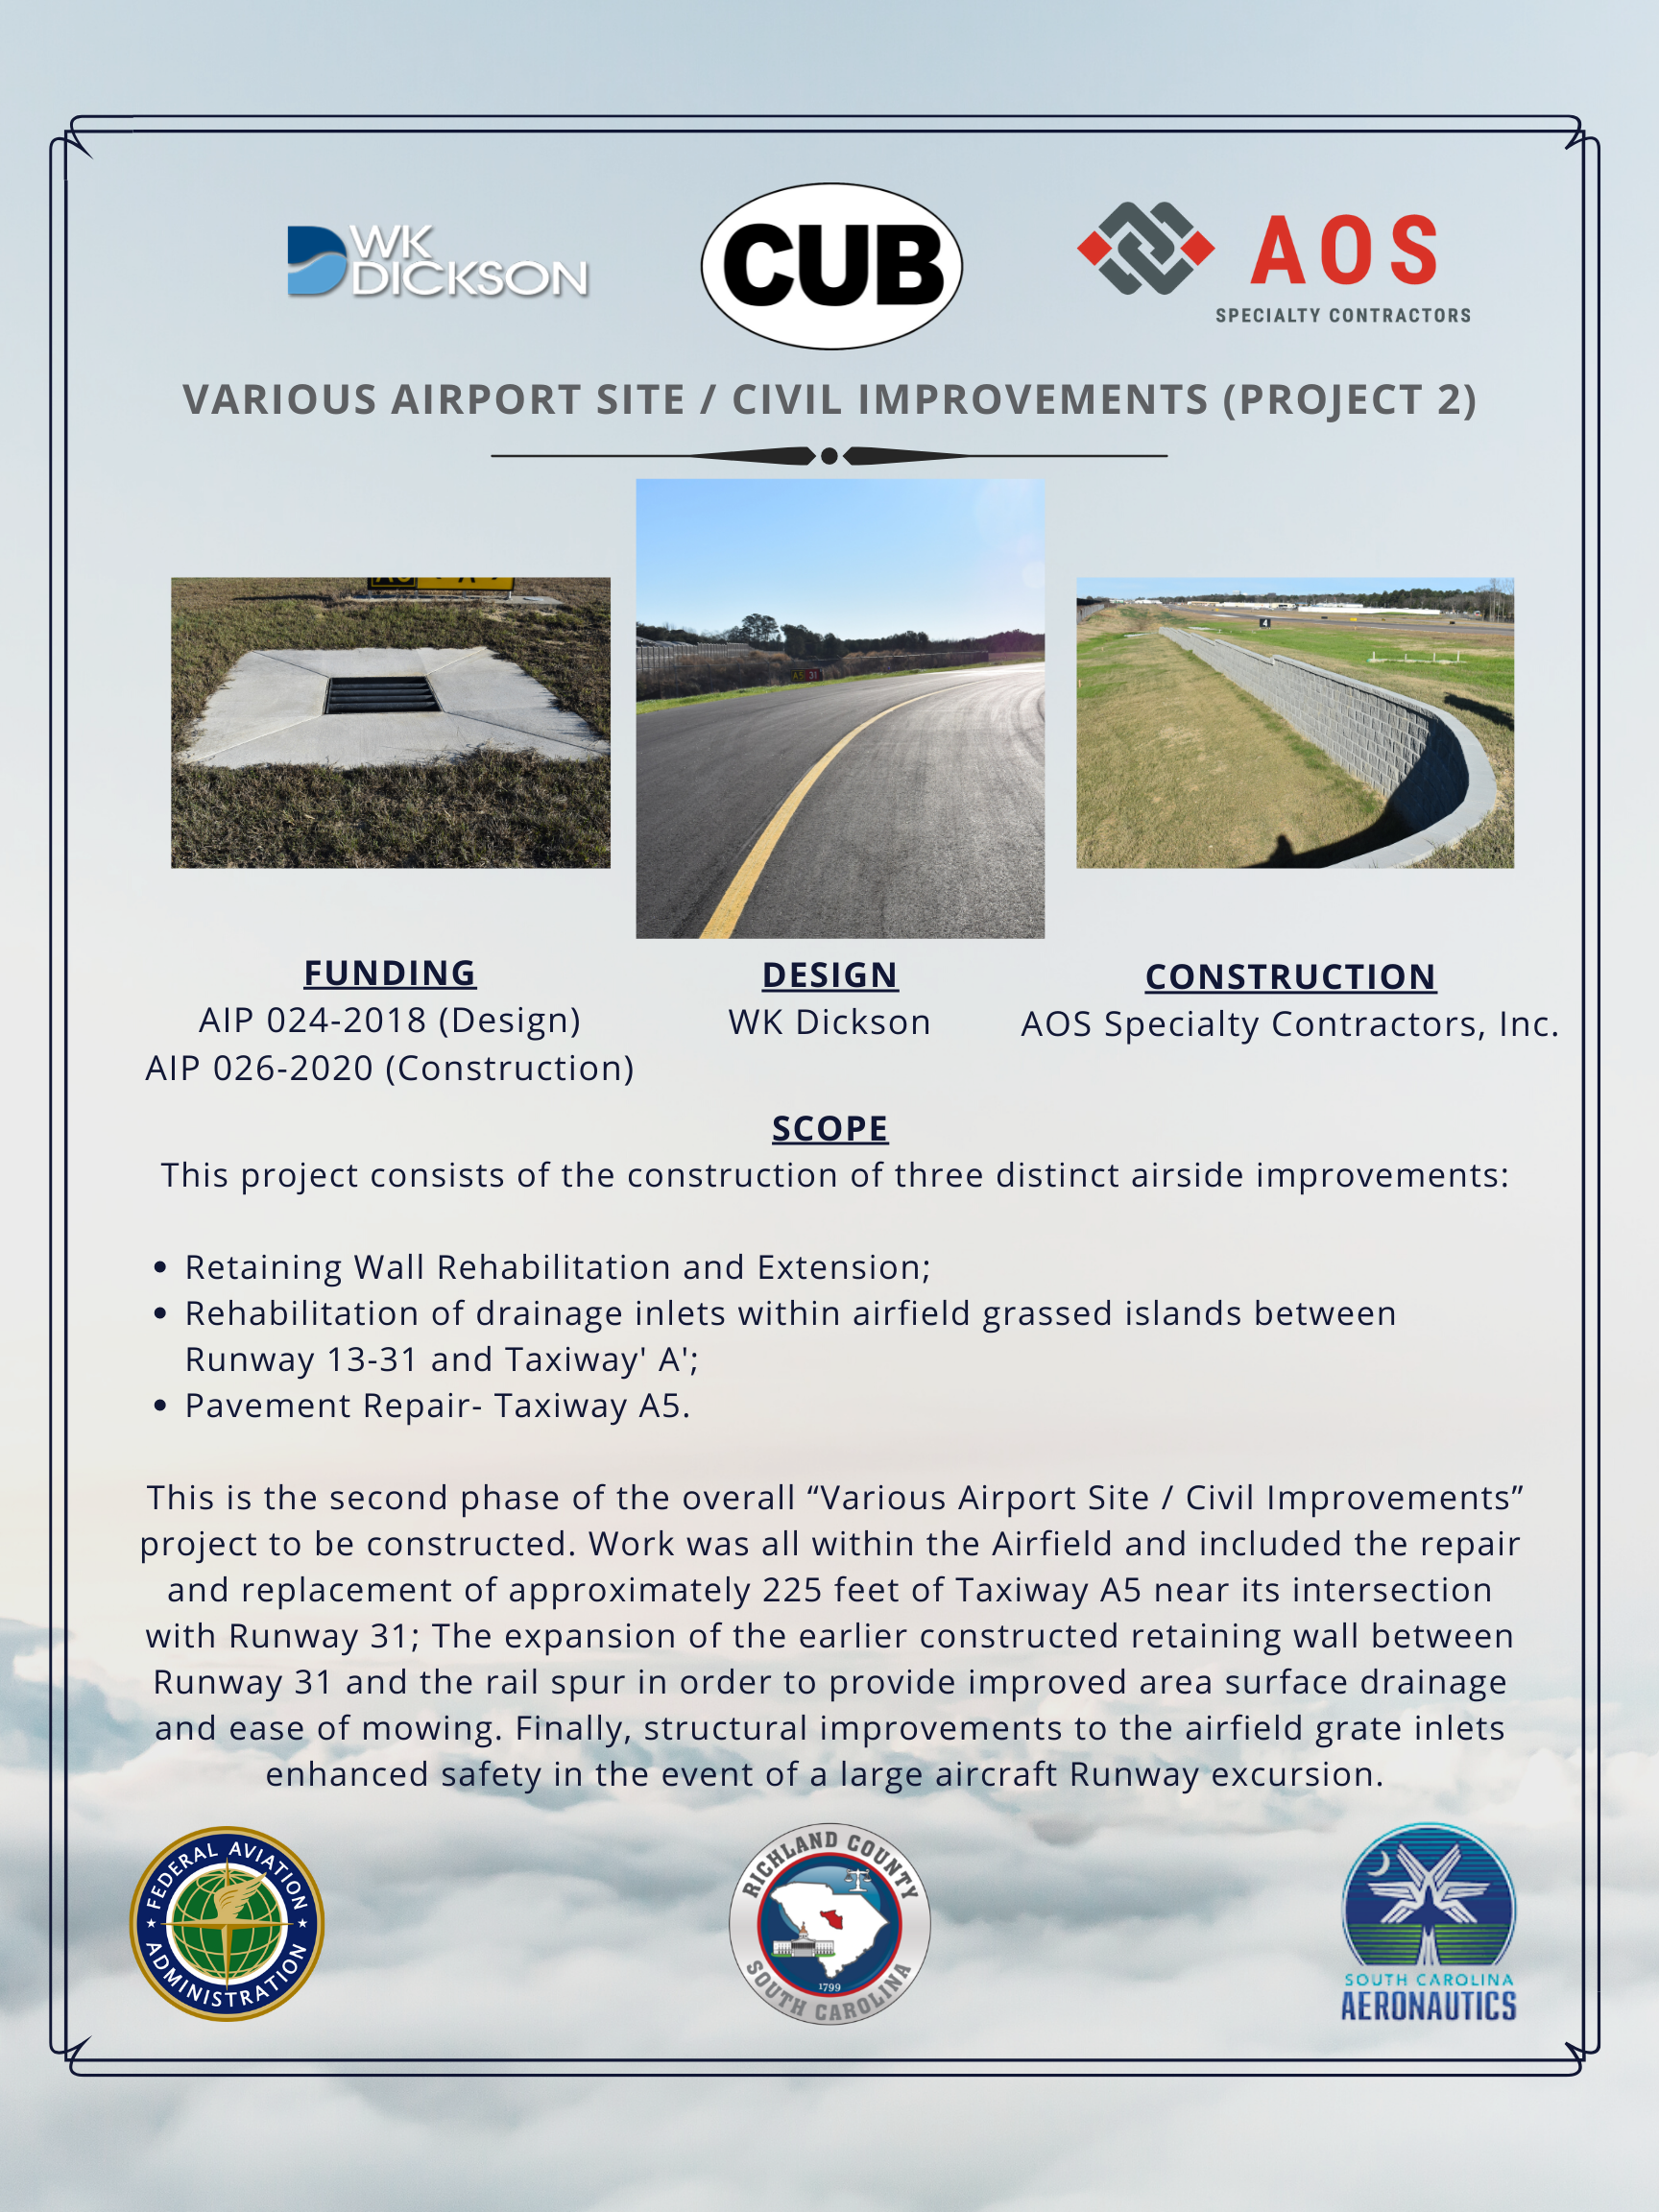 PDF Image of Various Airport Site/Civil Improvements Project 2